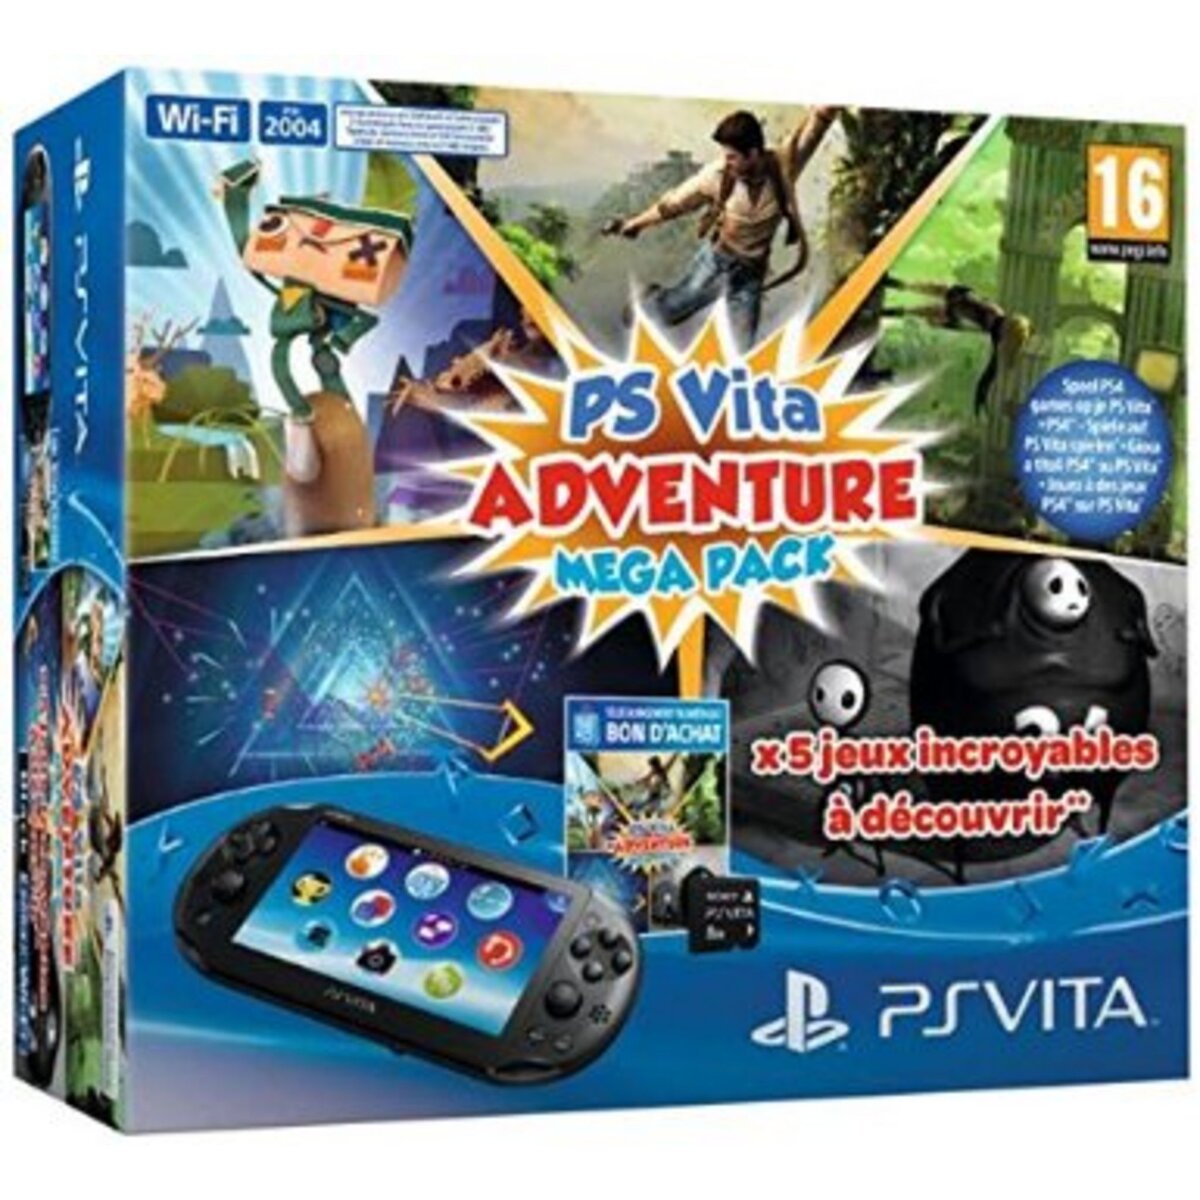 Console PS Vita 2000 Wifi Adventure MegaPack + Carte 8 Go